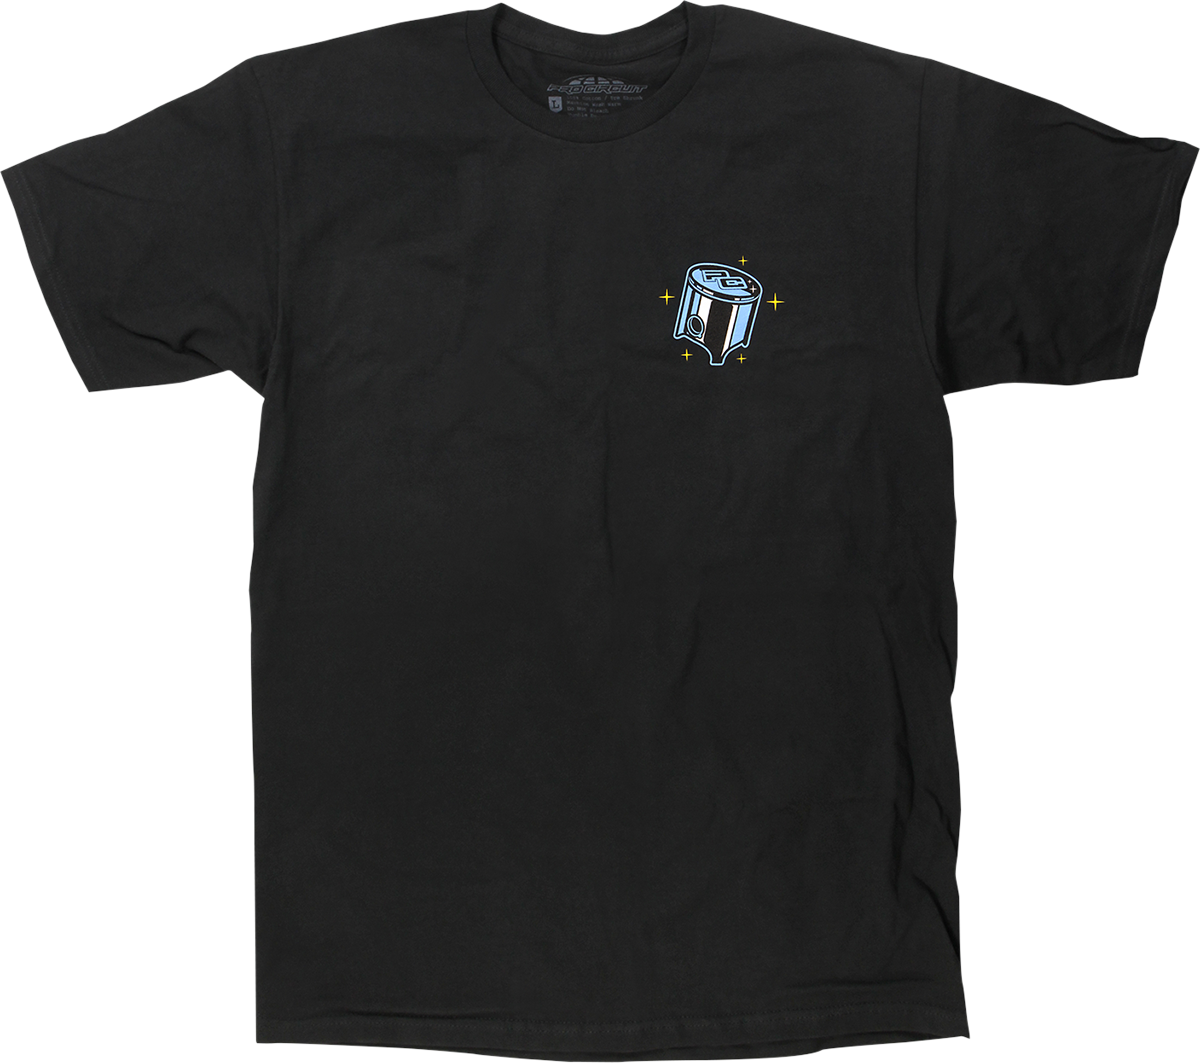 PRO CIRCUIT Piston T-Shirt - Black - Small 6431740-010